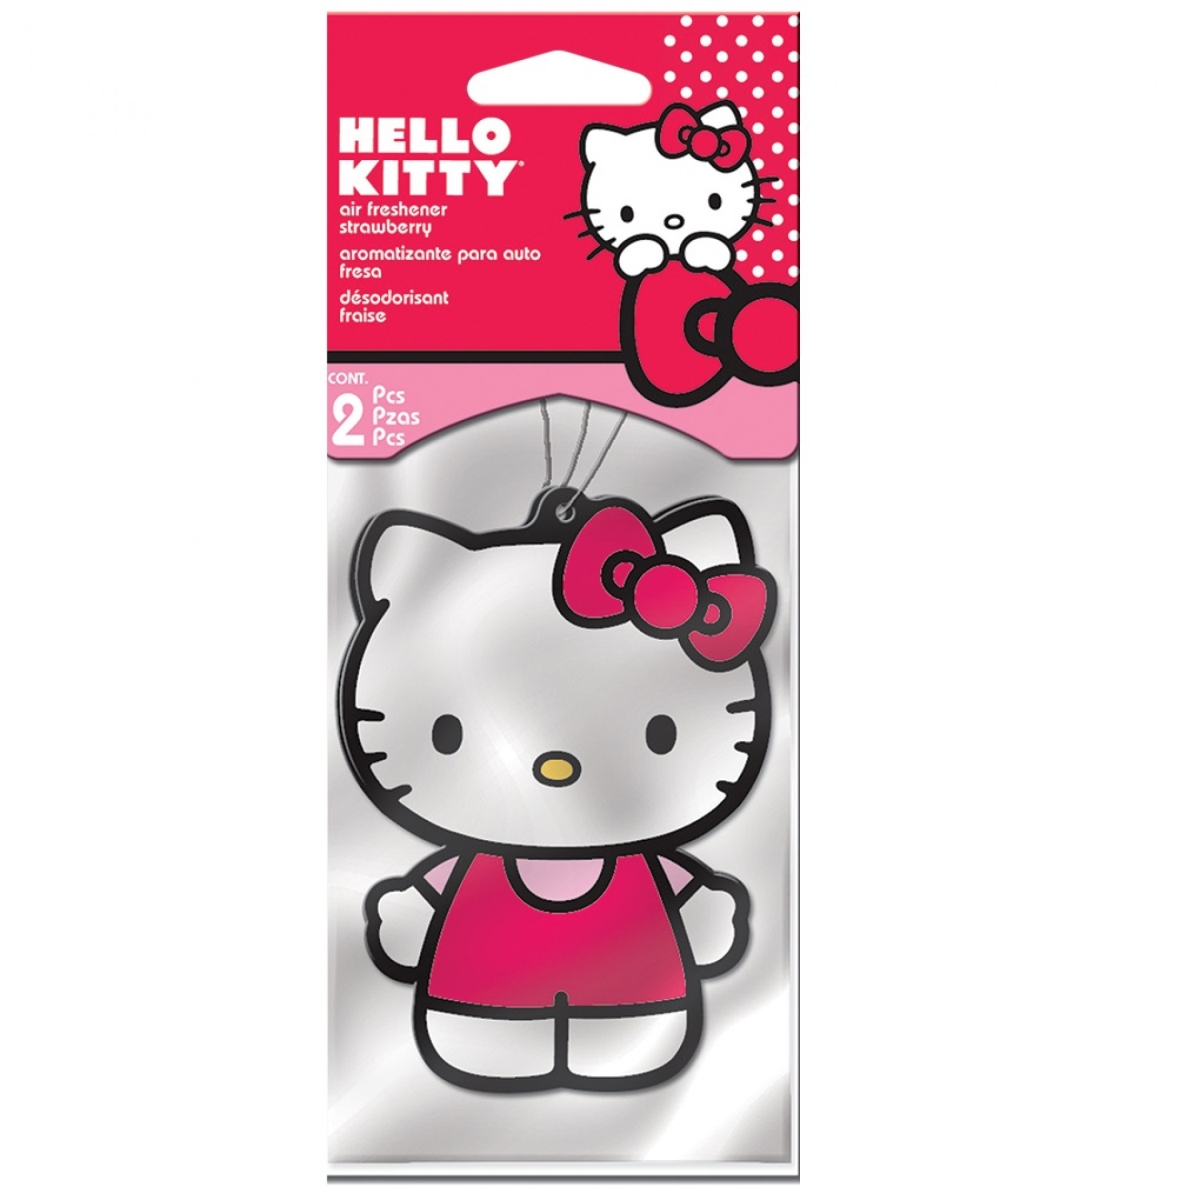 Hello Kitty 828371 Hello Kitty Strawberry Air Freshener, Pack of 2